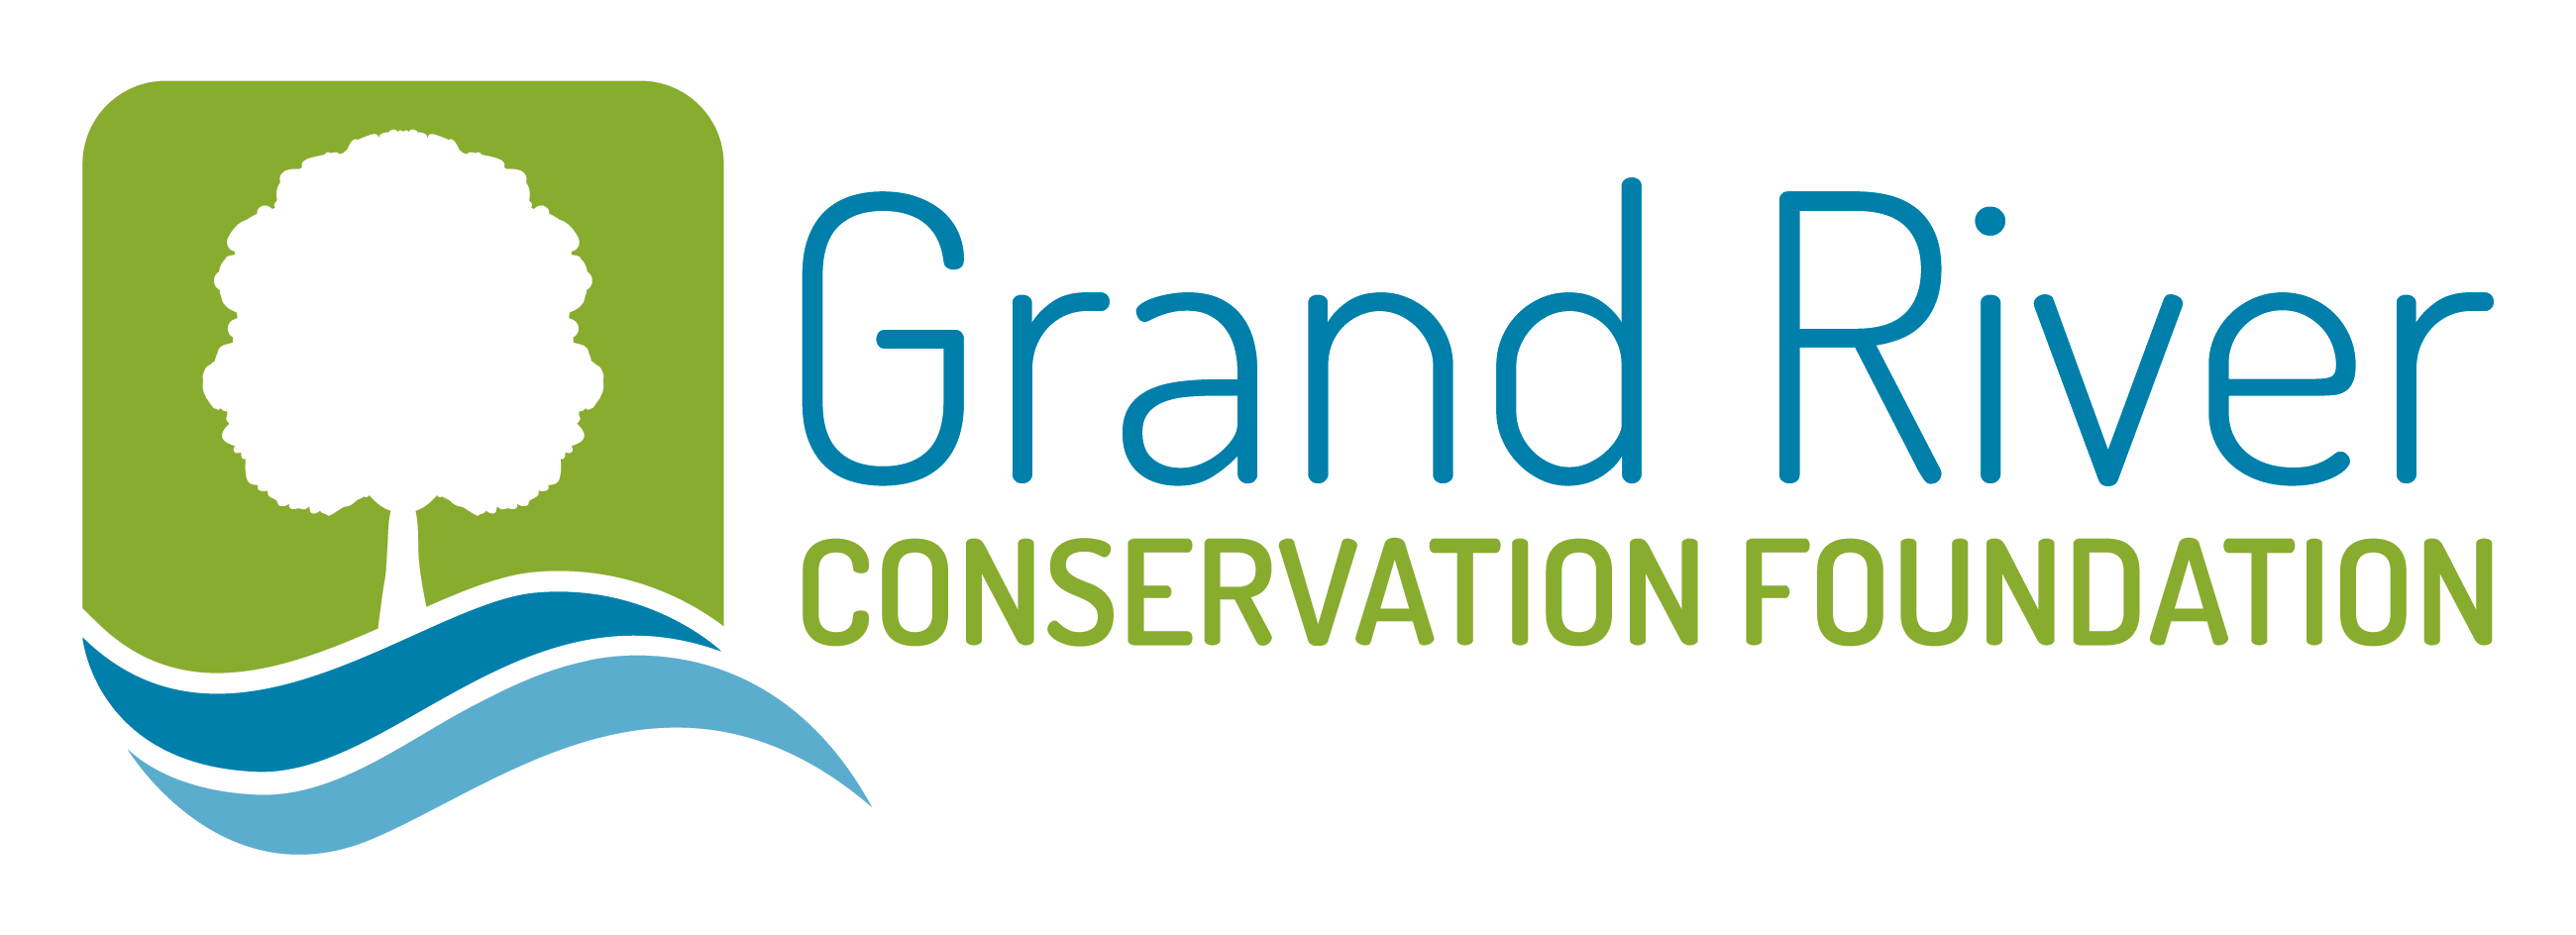 GRAND RIVER CONSERVATION FOUNDATION logo